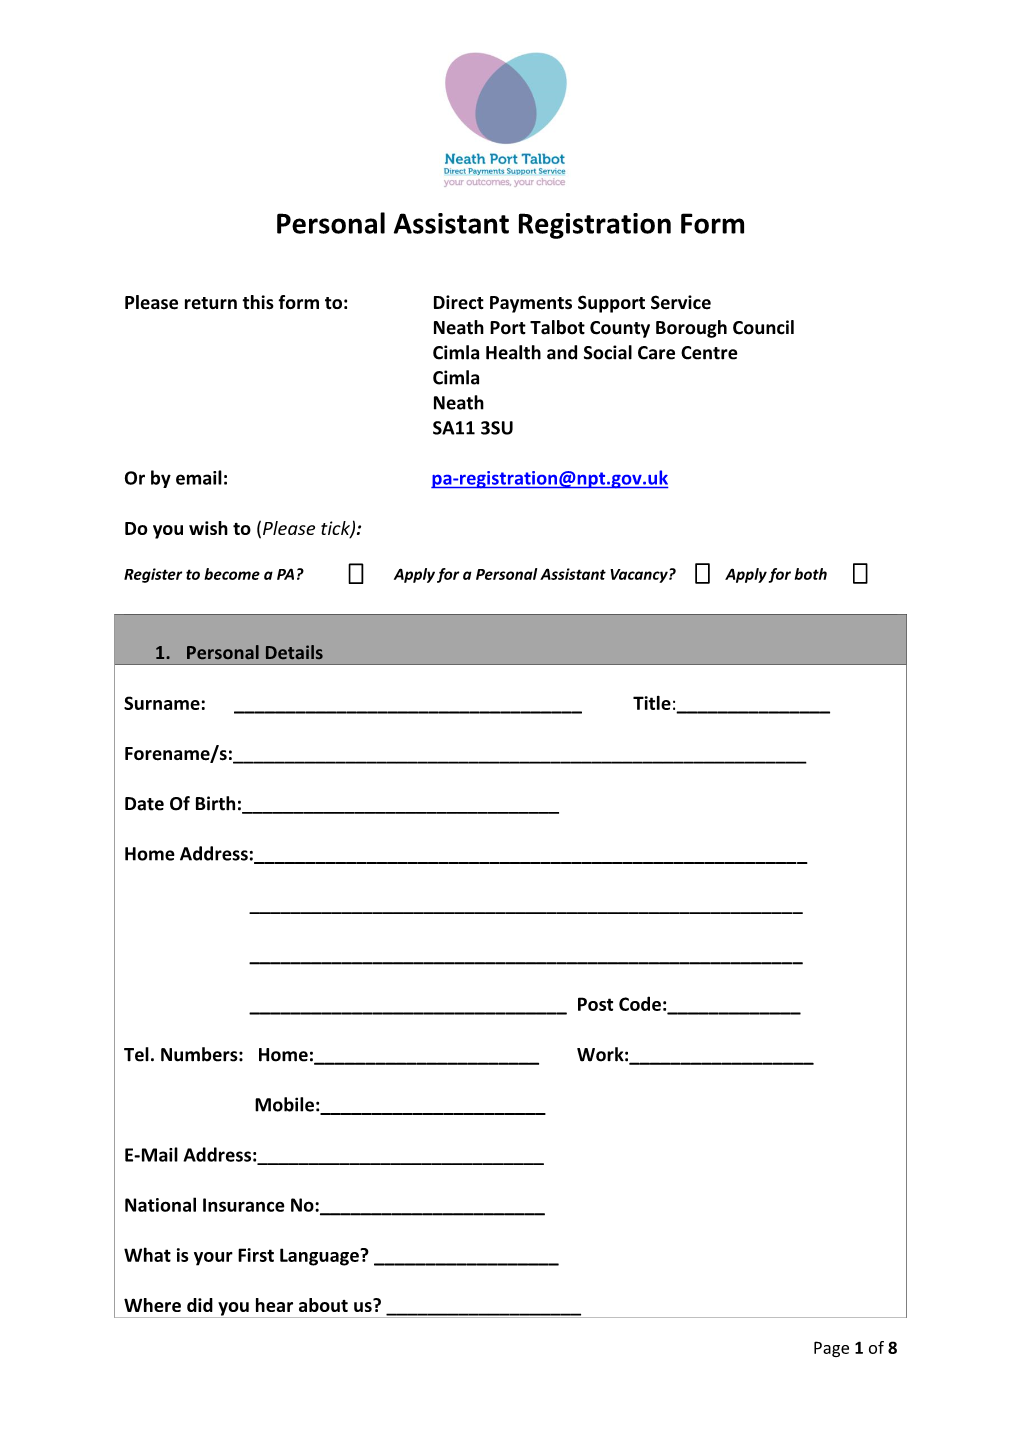 Personal Assistant Registration Form